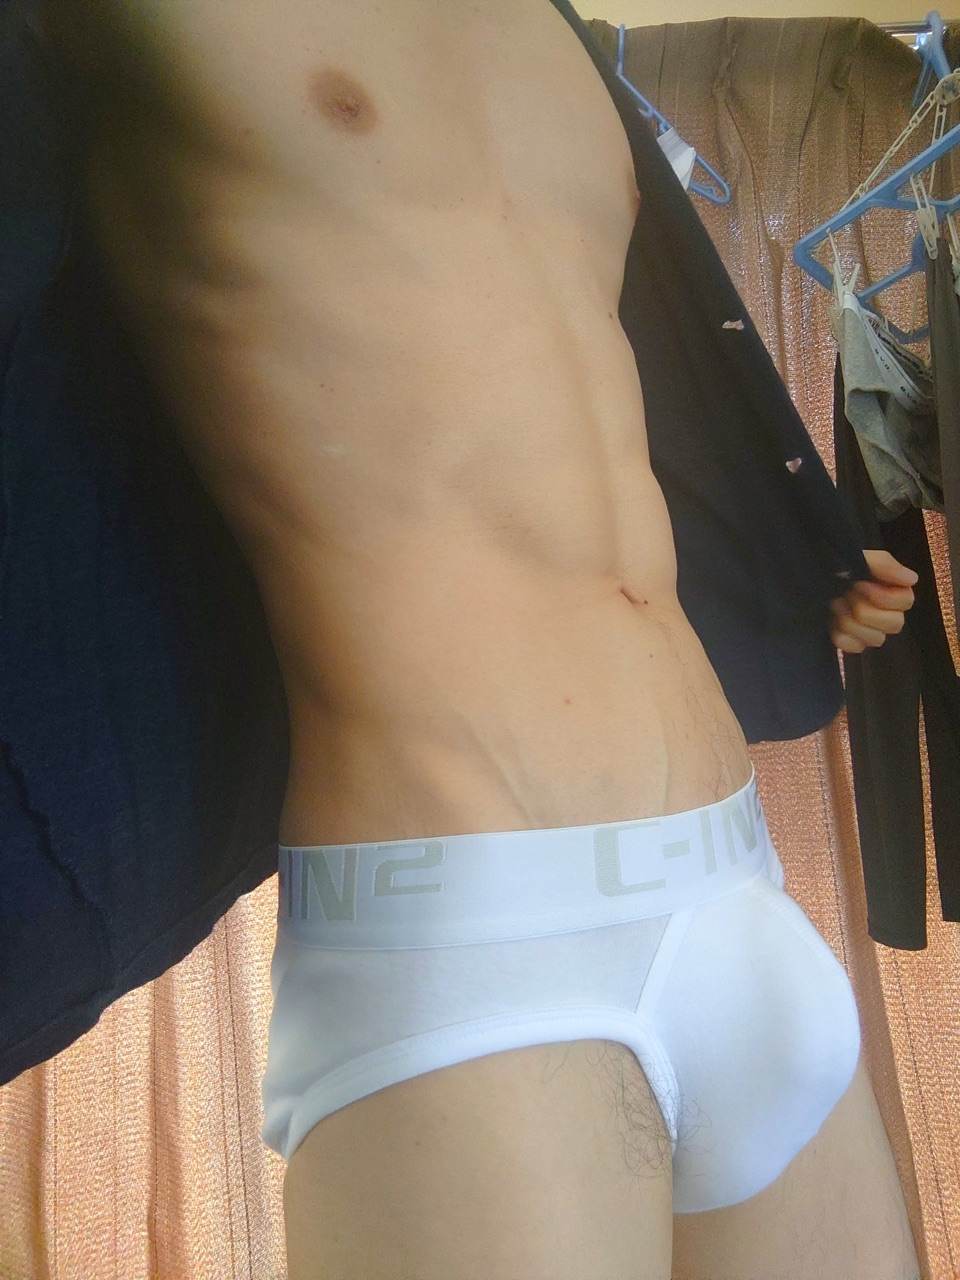 Hot men in underwear 541